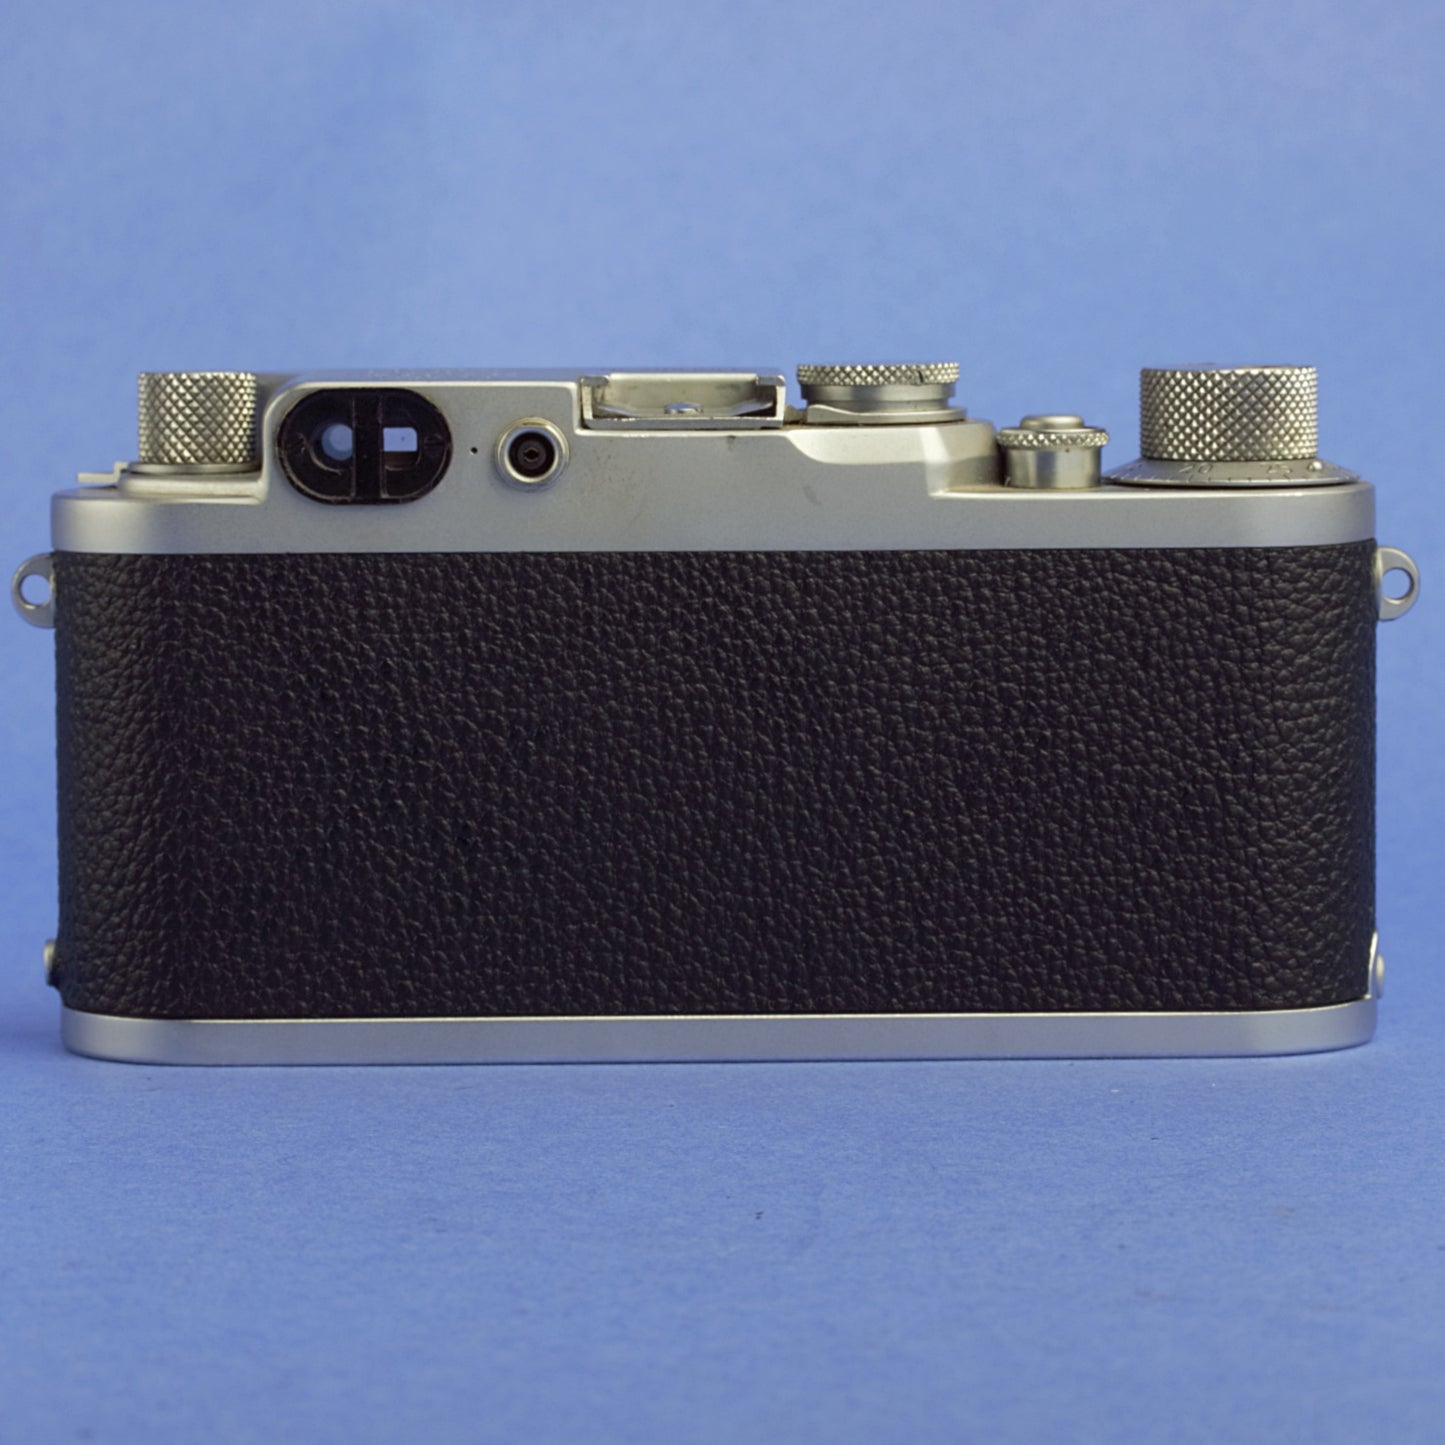 Leica IIF Rangefinder Camera Red Dial 1/1000